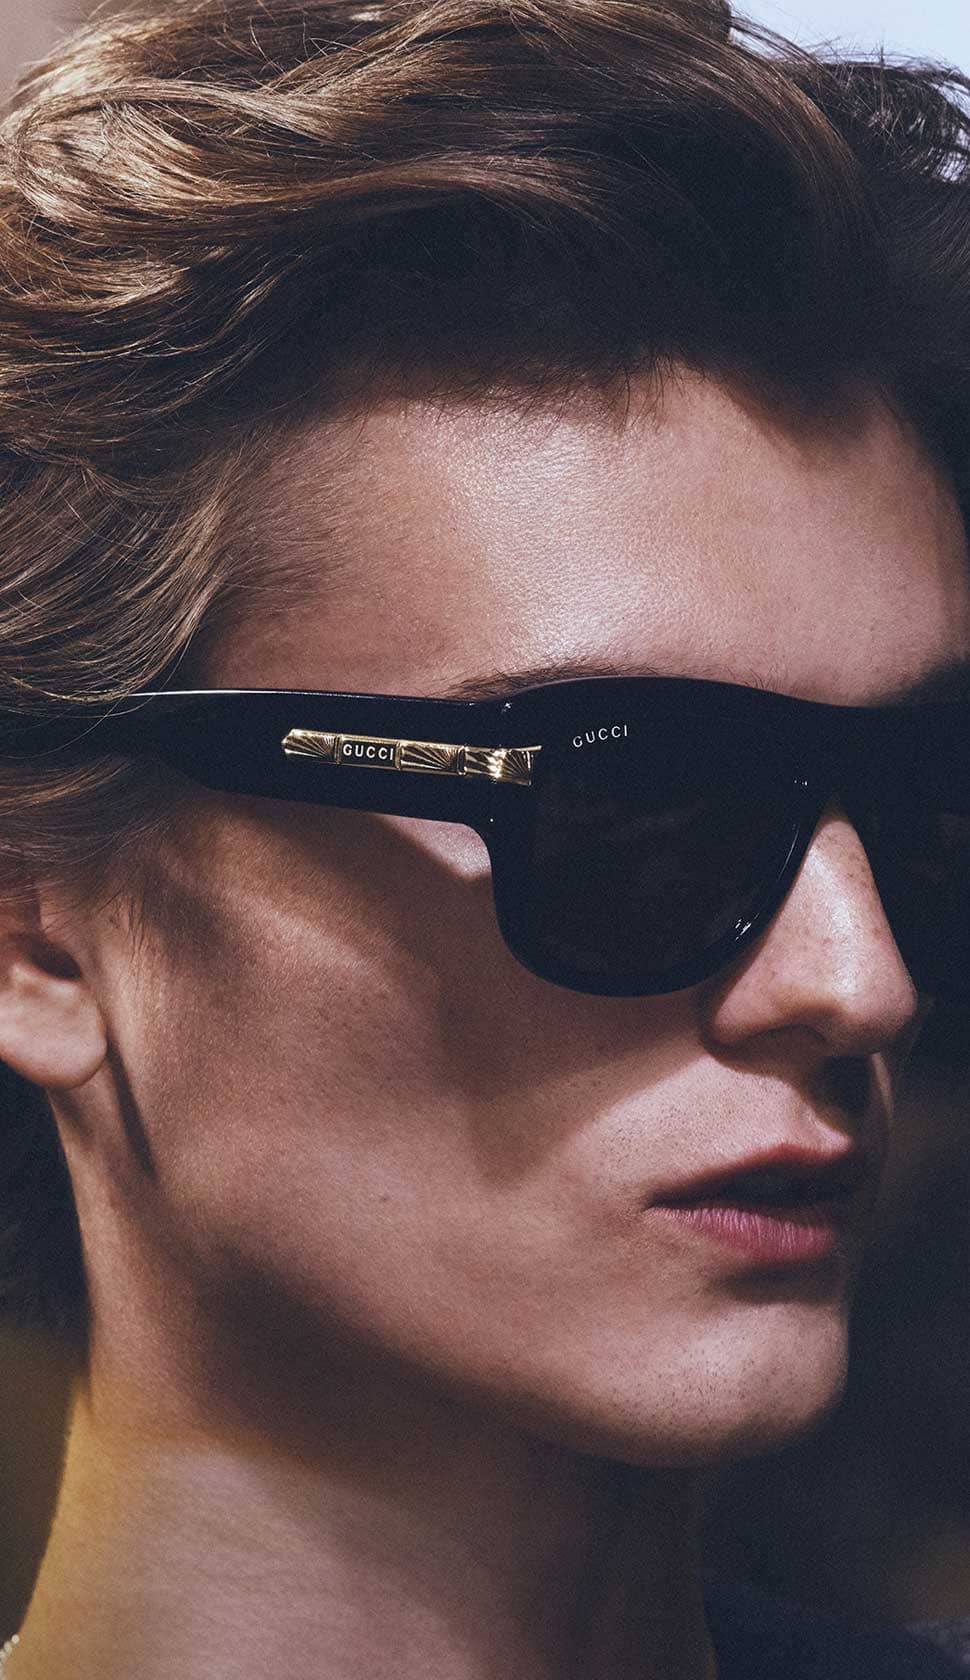 Gucci sunglasses mask design with light metal frame.